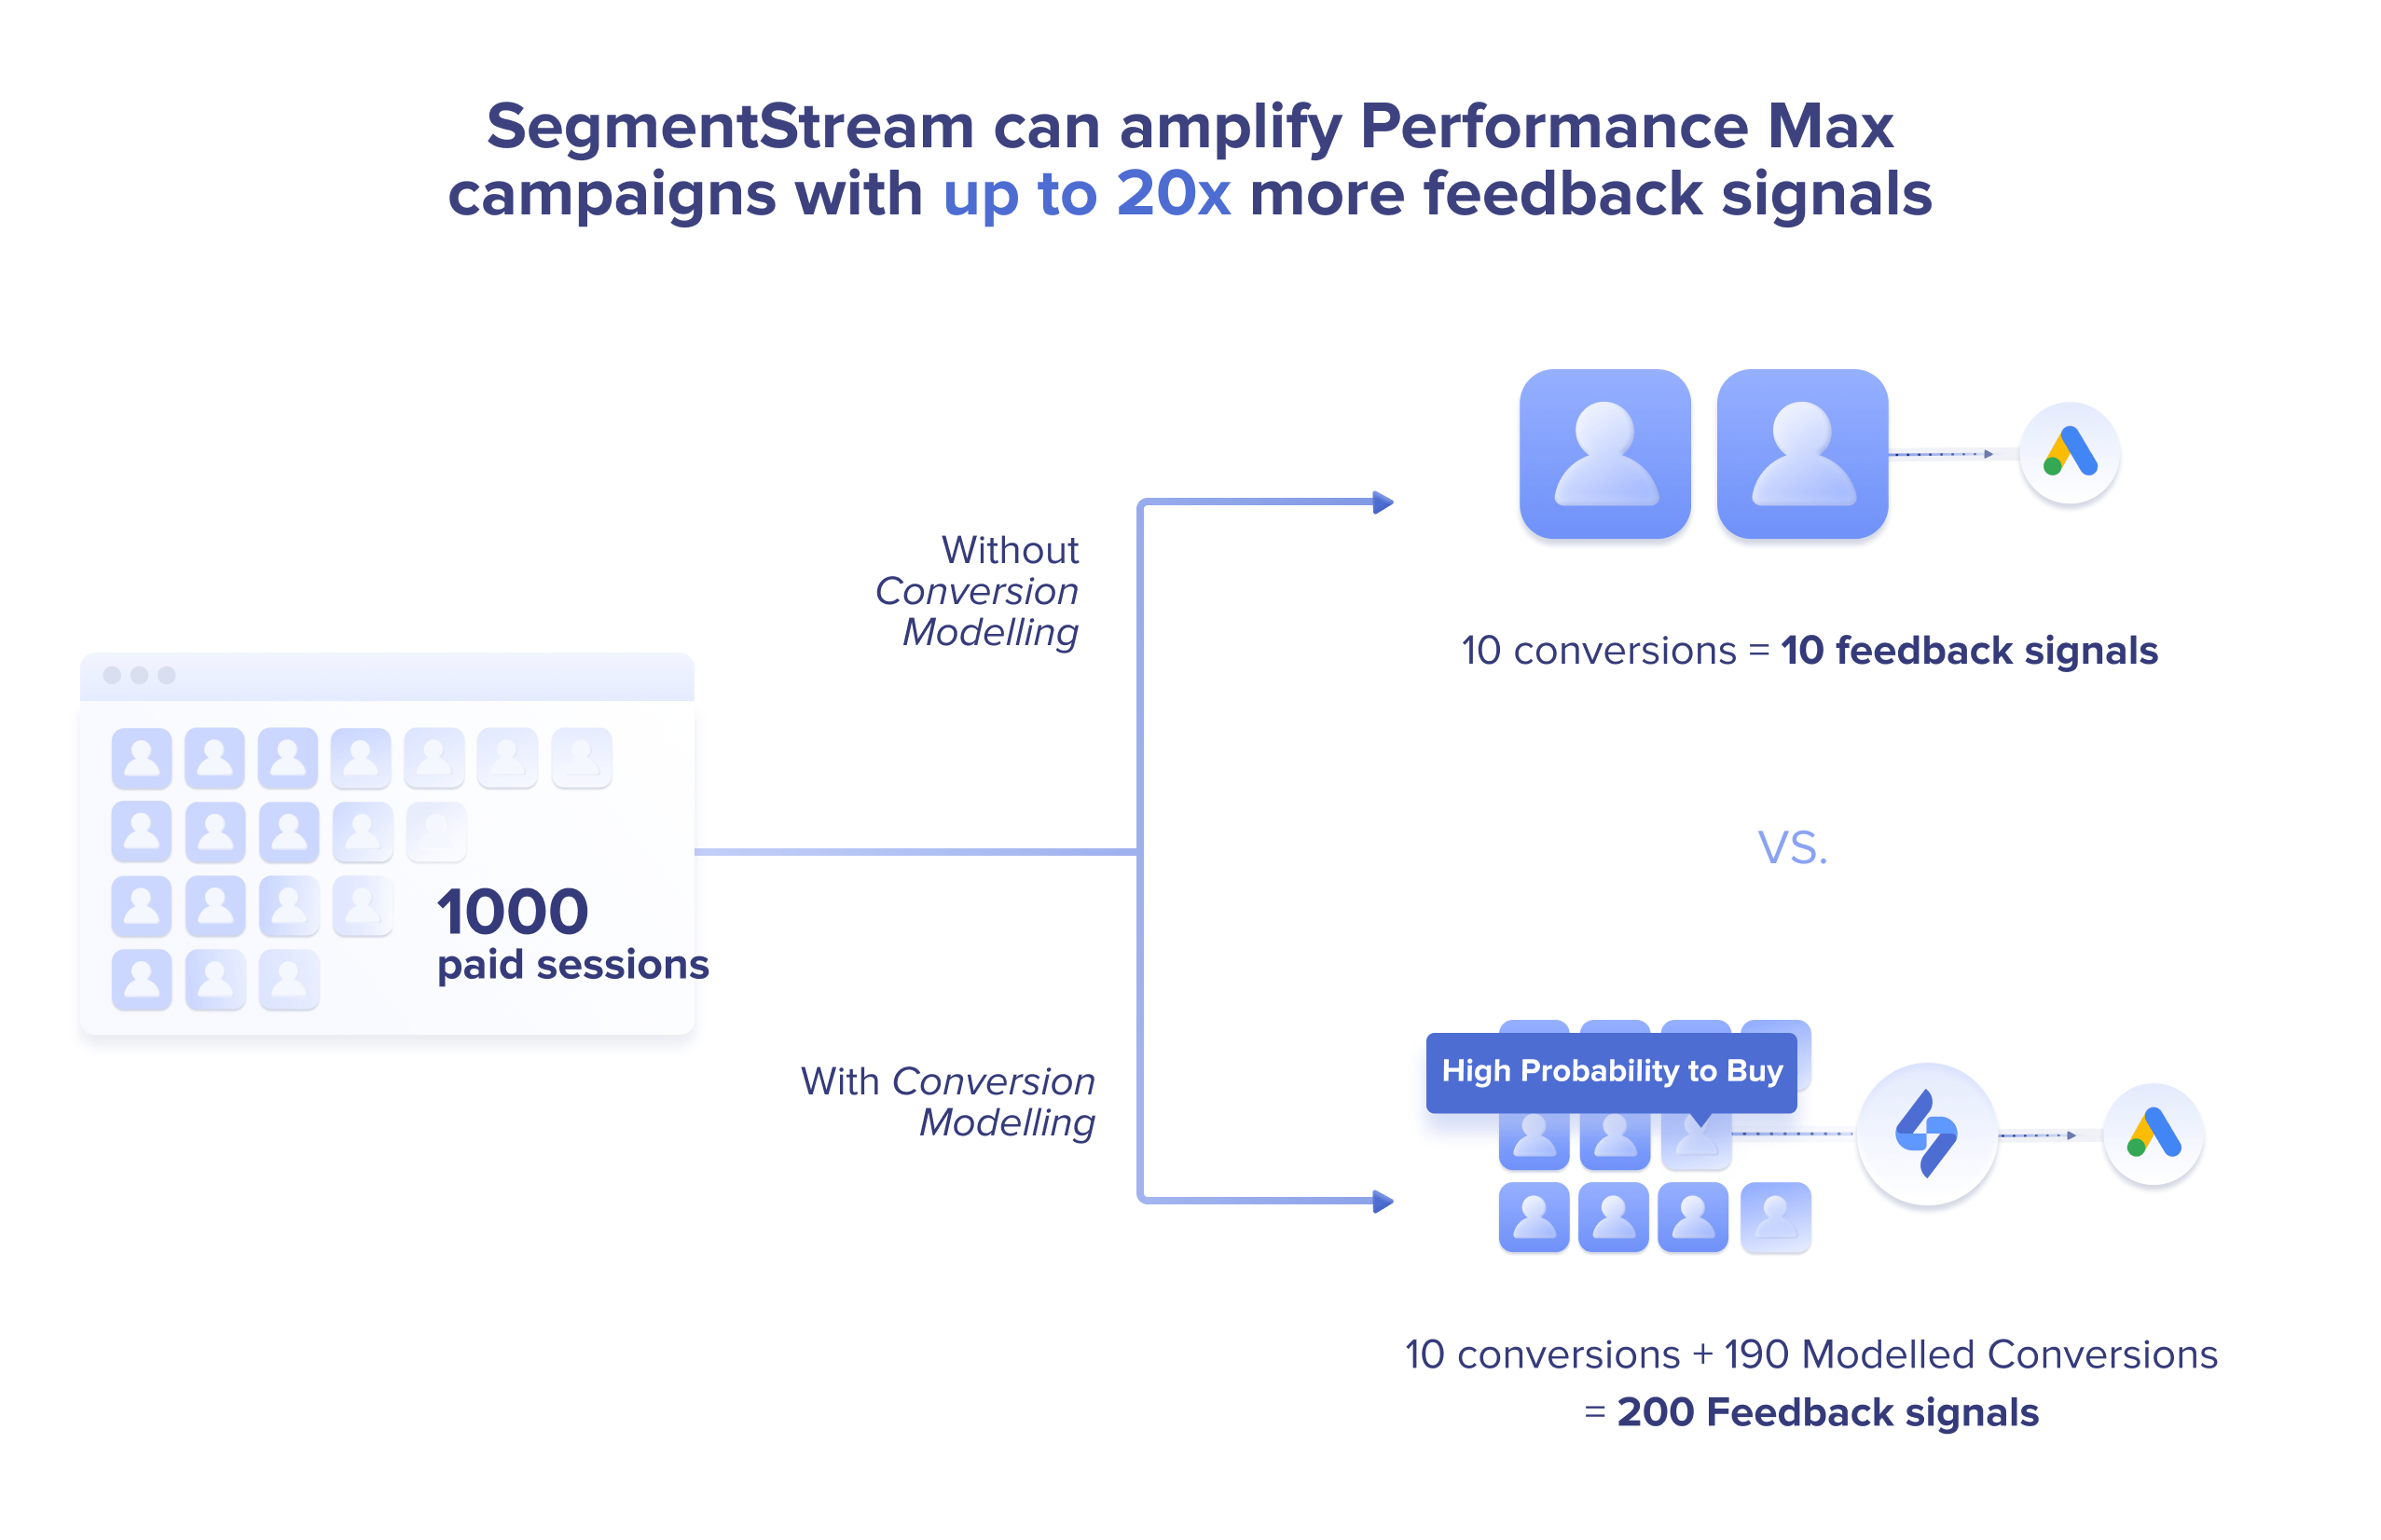 How to provide more conversion signals to improve PMax performance - use SegmentStream